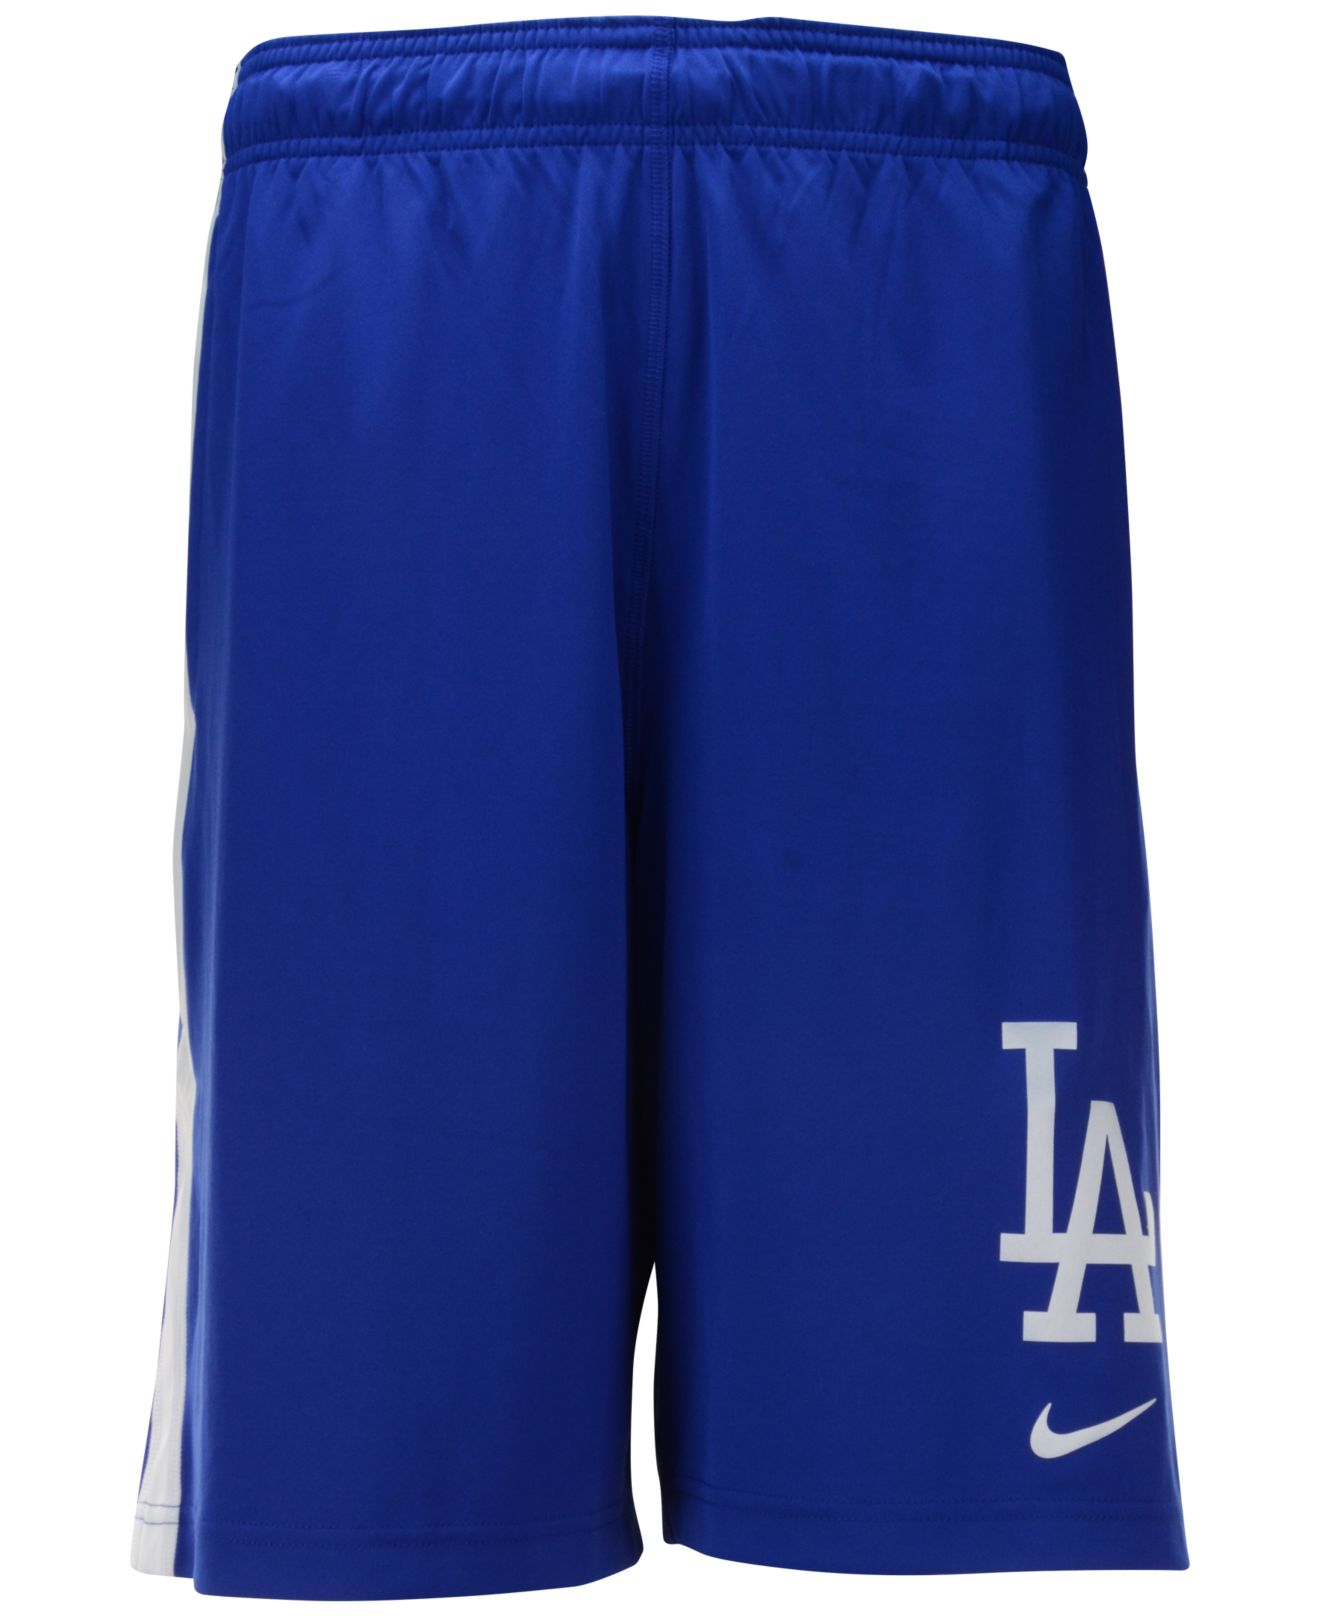 Lyst - Nike Men'S Los Angeles Dodgers Fly Shorts in Blue for Men